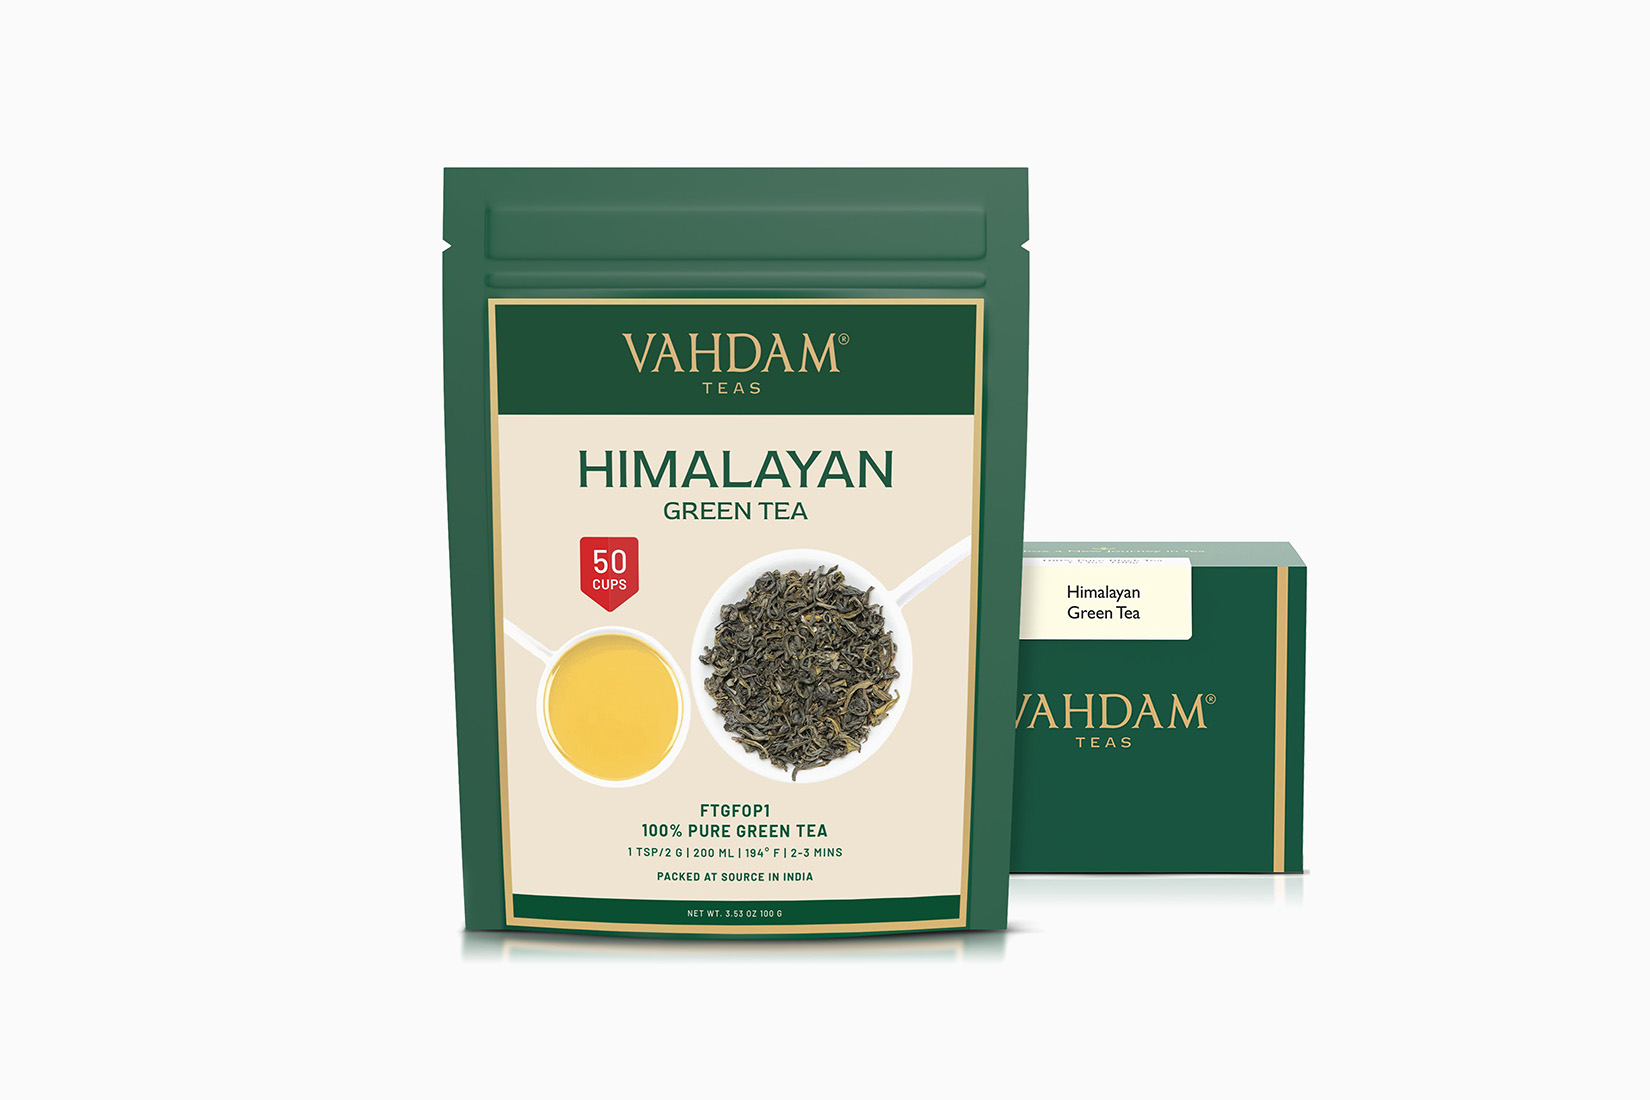 vahdam himalayan green tea review luxe digital